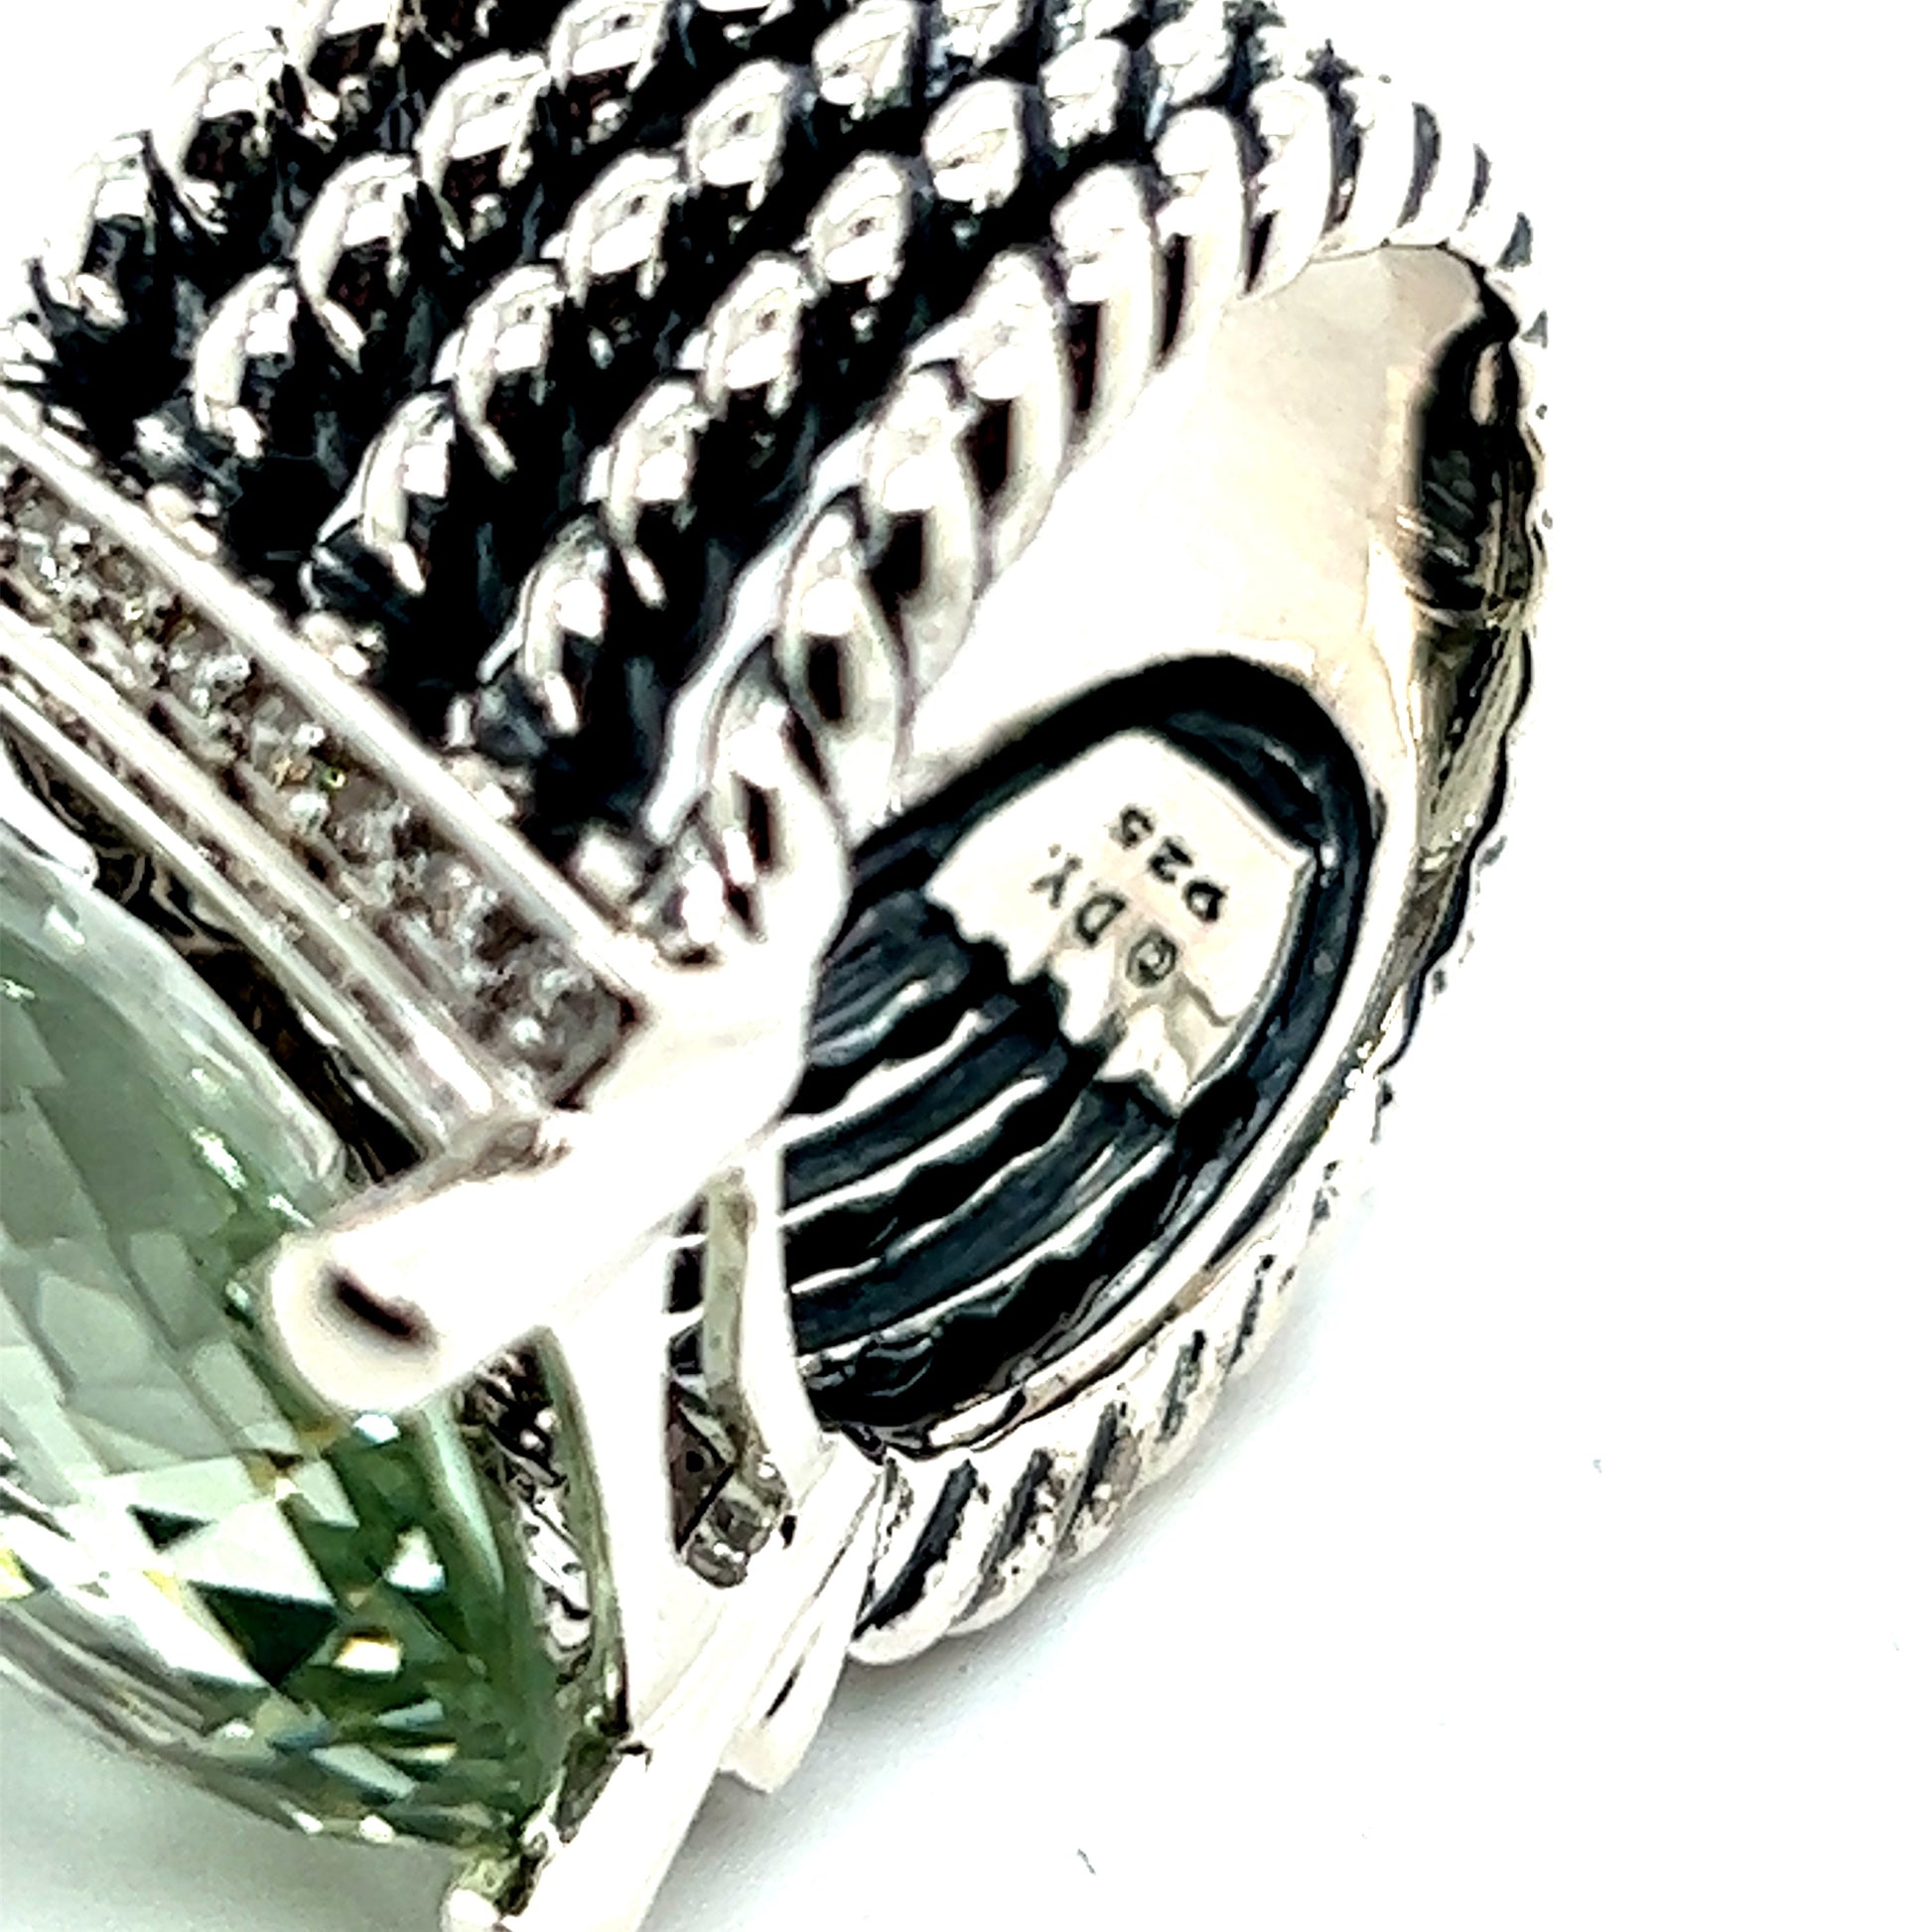 David Yurman Authentic Estate Wheaton Prasiolite Pave Diamond Ring 7.5 Silver 20 x 15 mm DY240